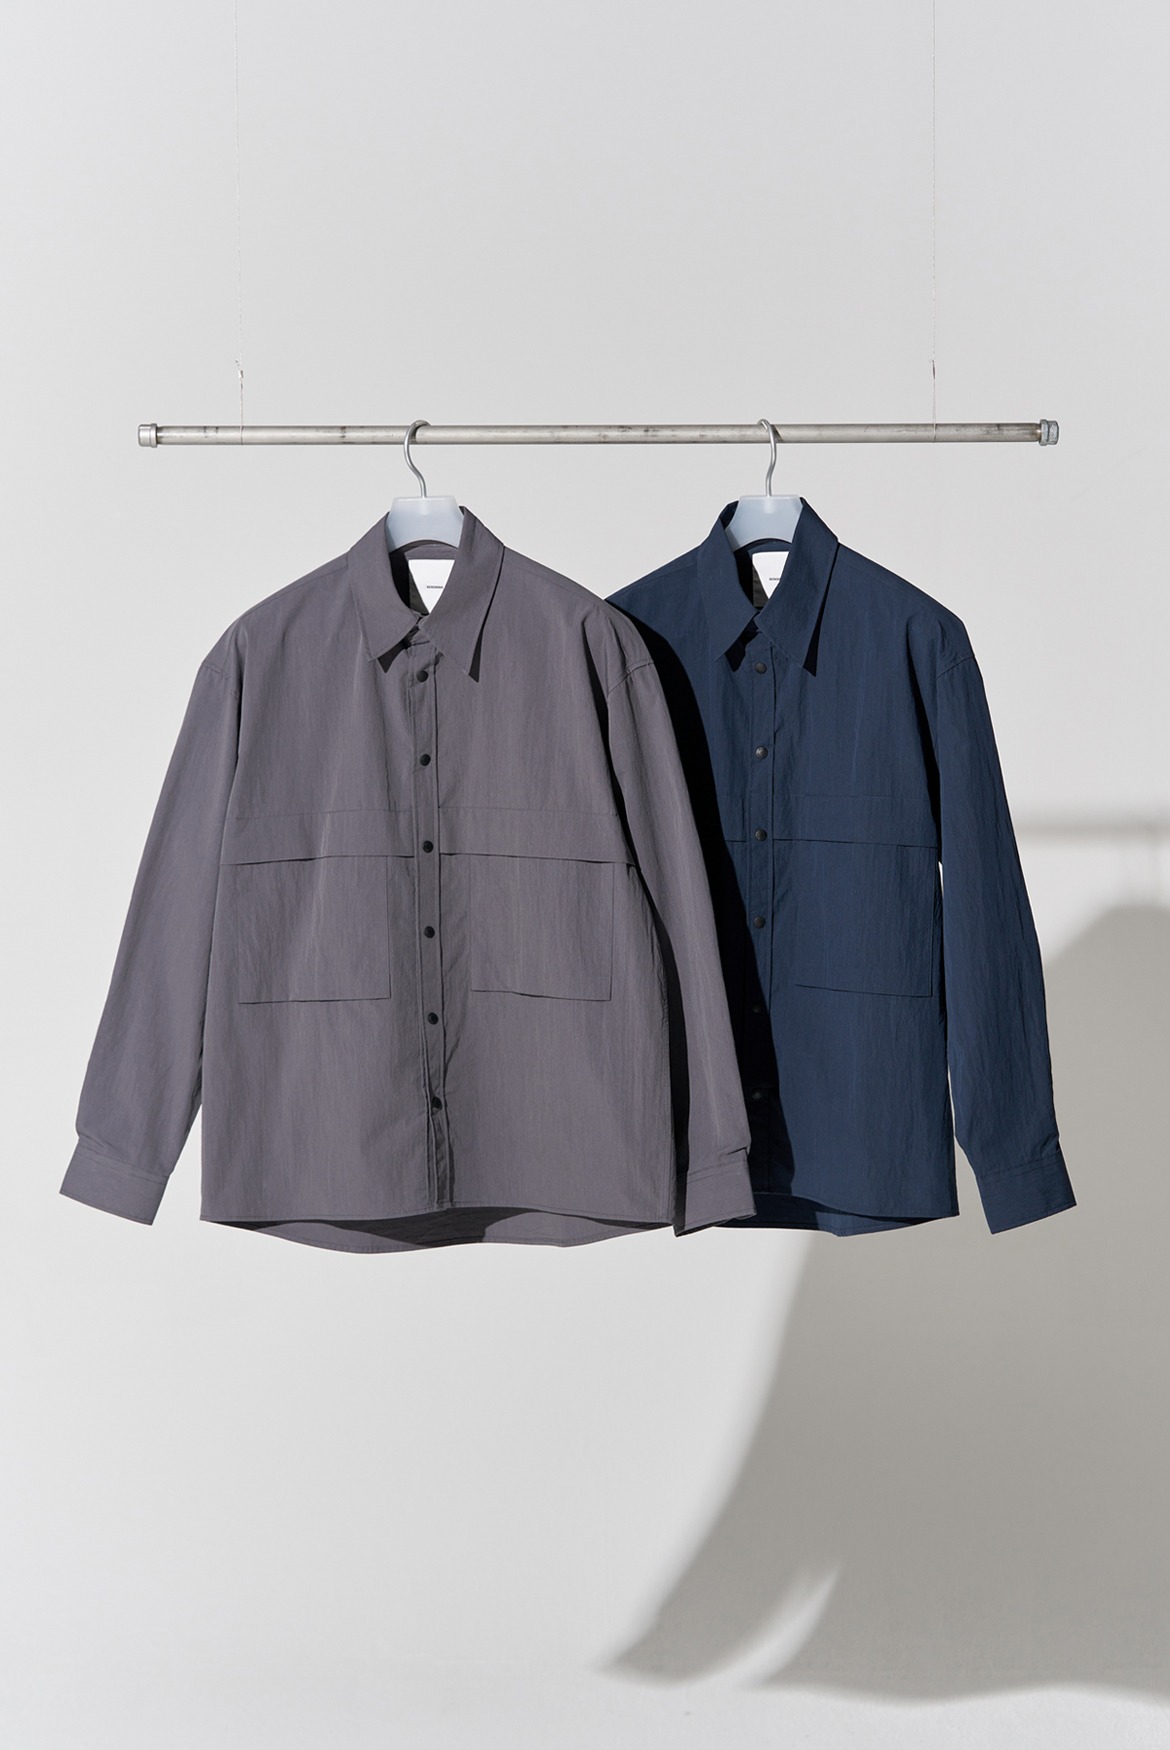 Fold Easy Button Nylon Shirts [2 Colors]